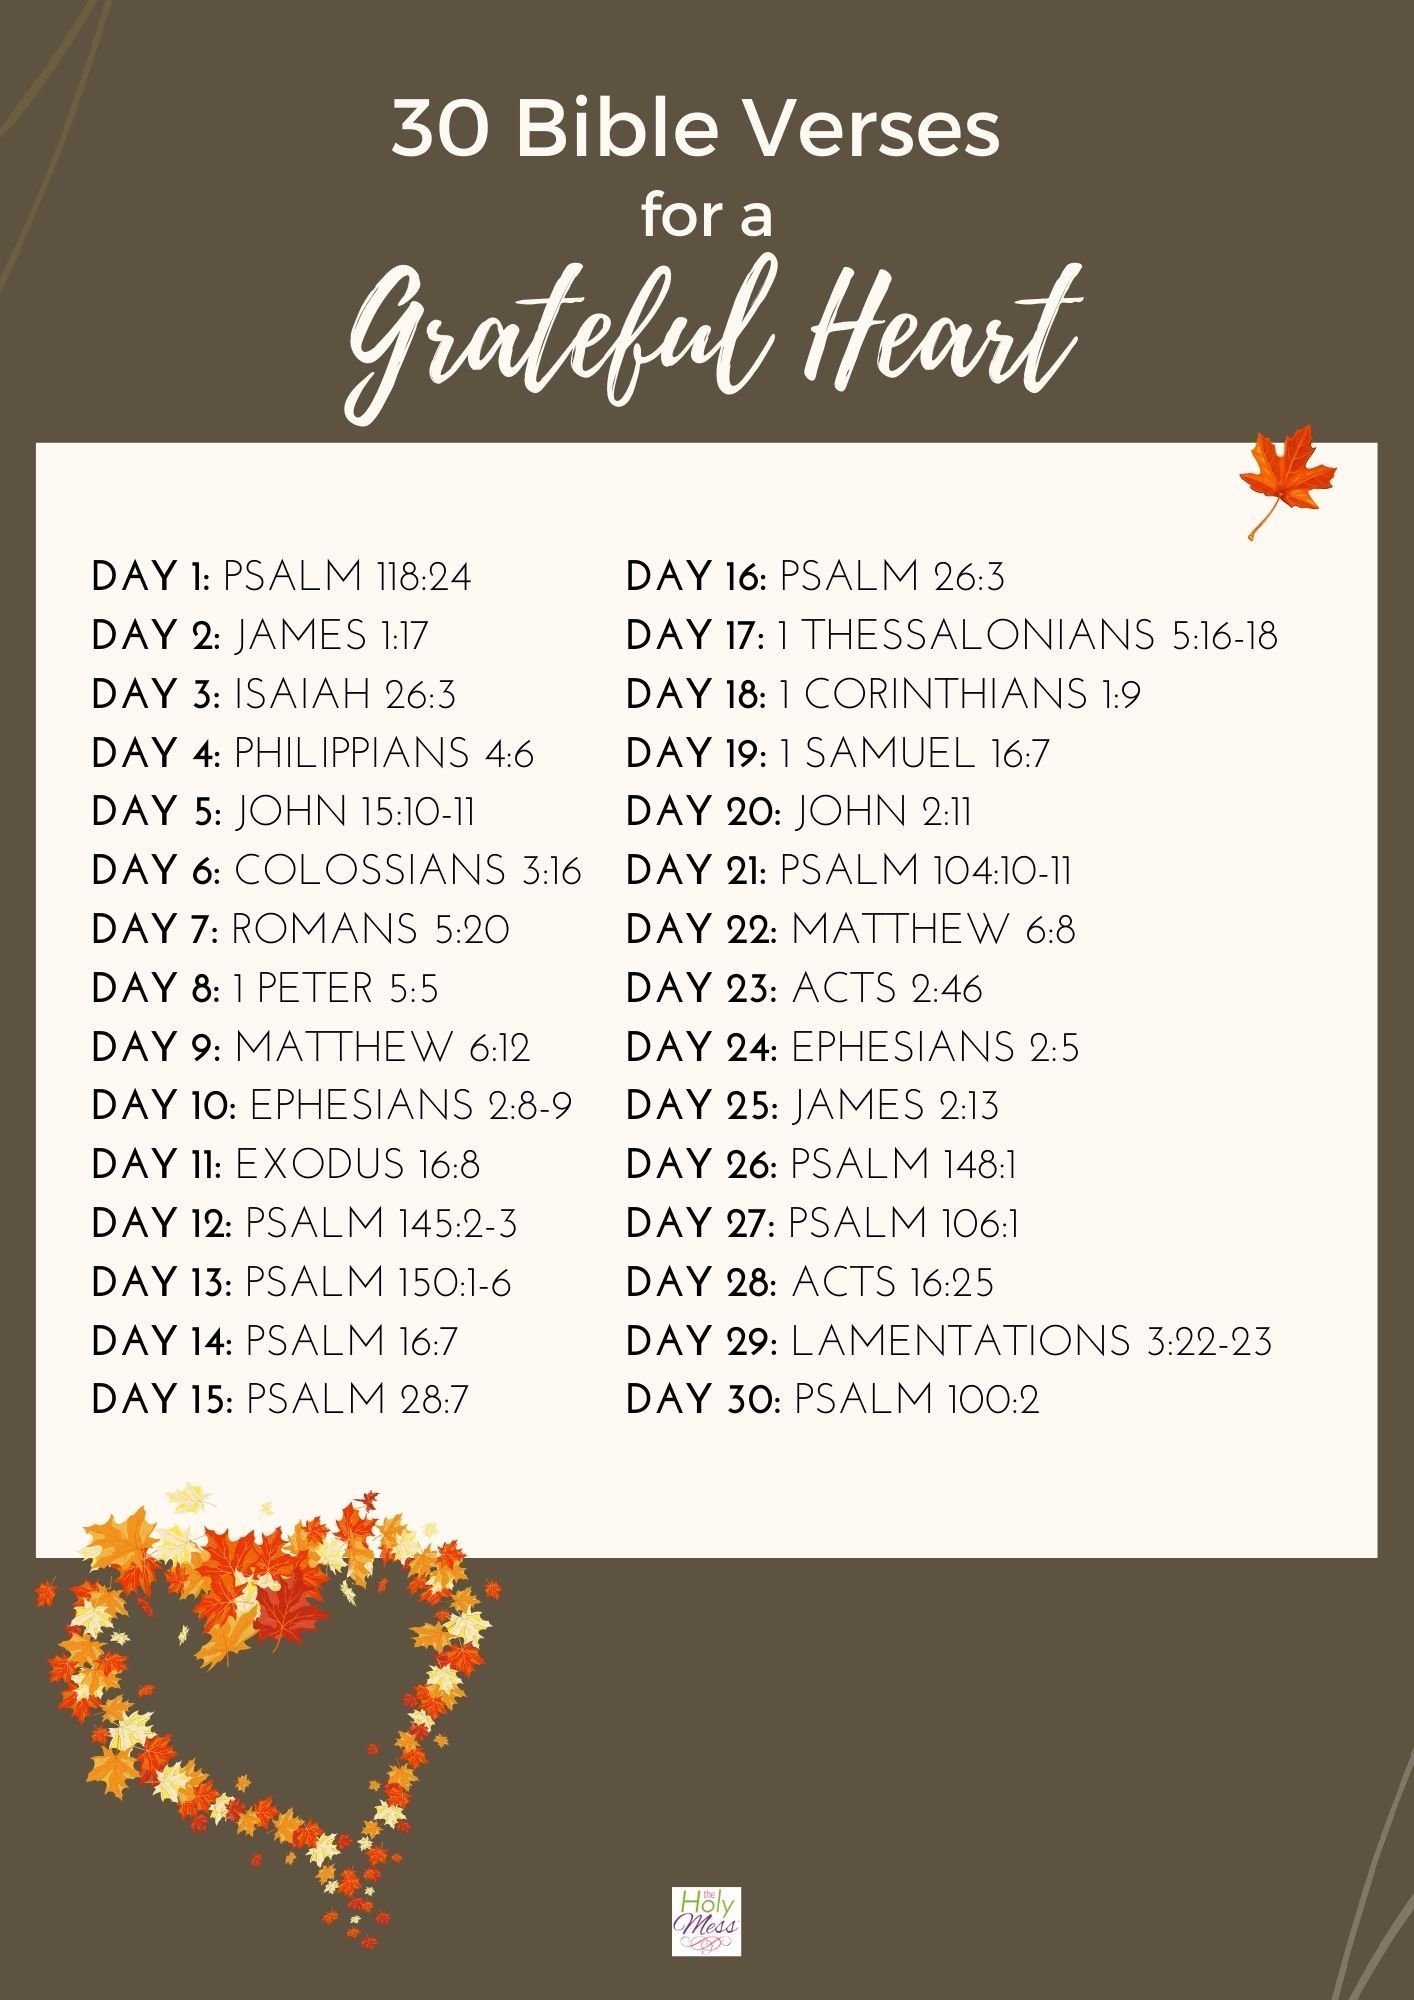 30 Bible Verses for a Grateful Heart